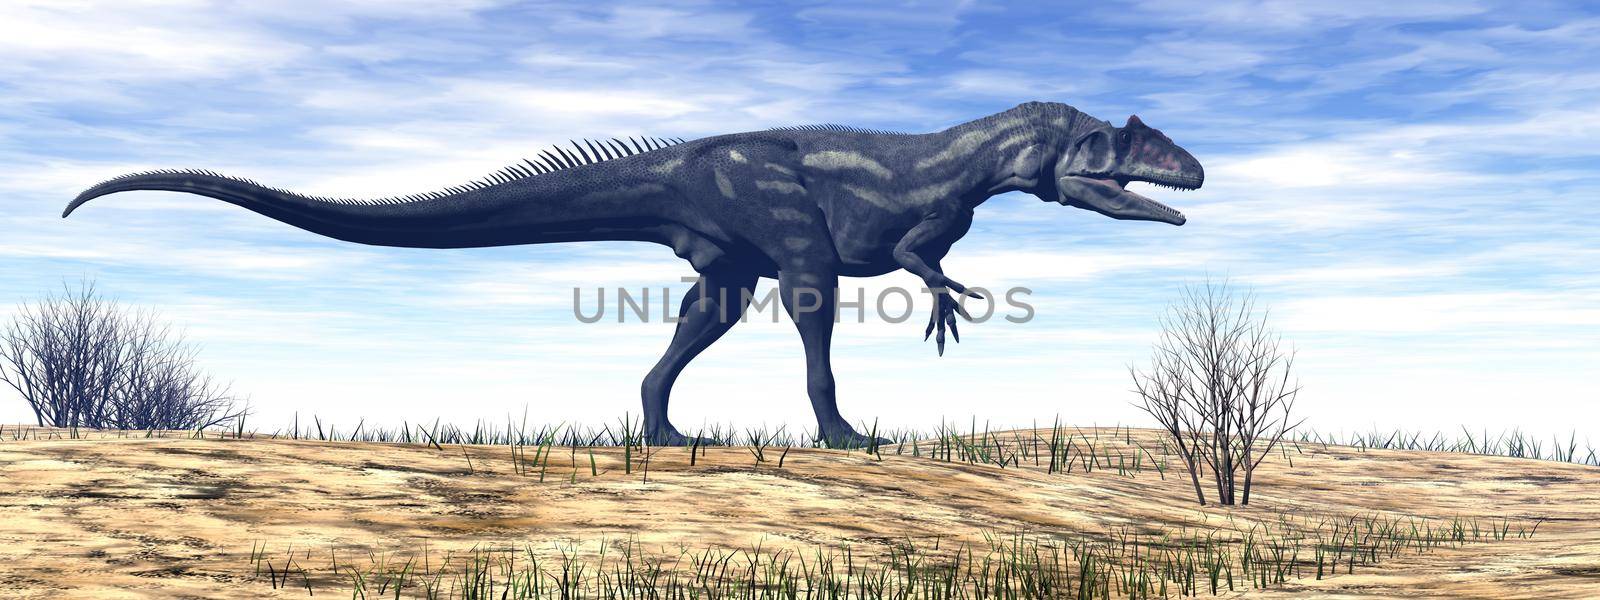 Allosaurus dinosaur walking in the desert by day - 3D render